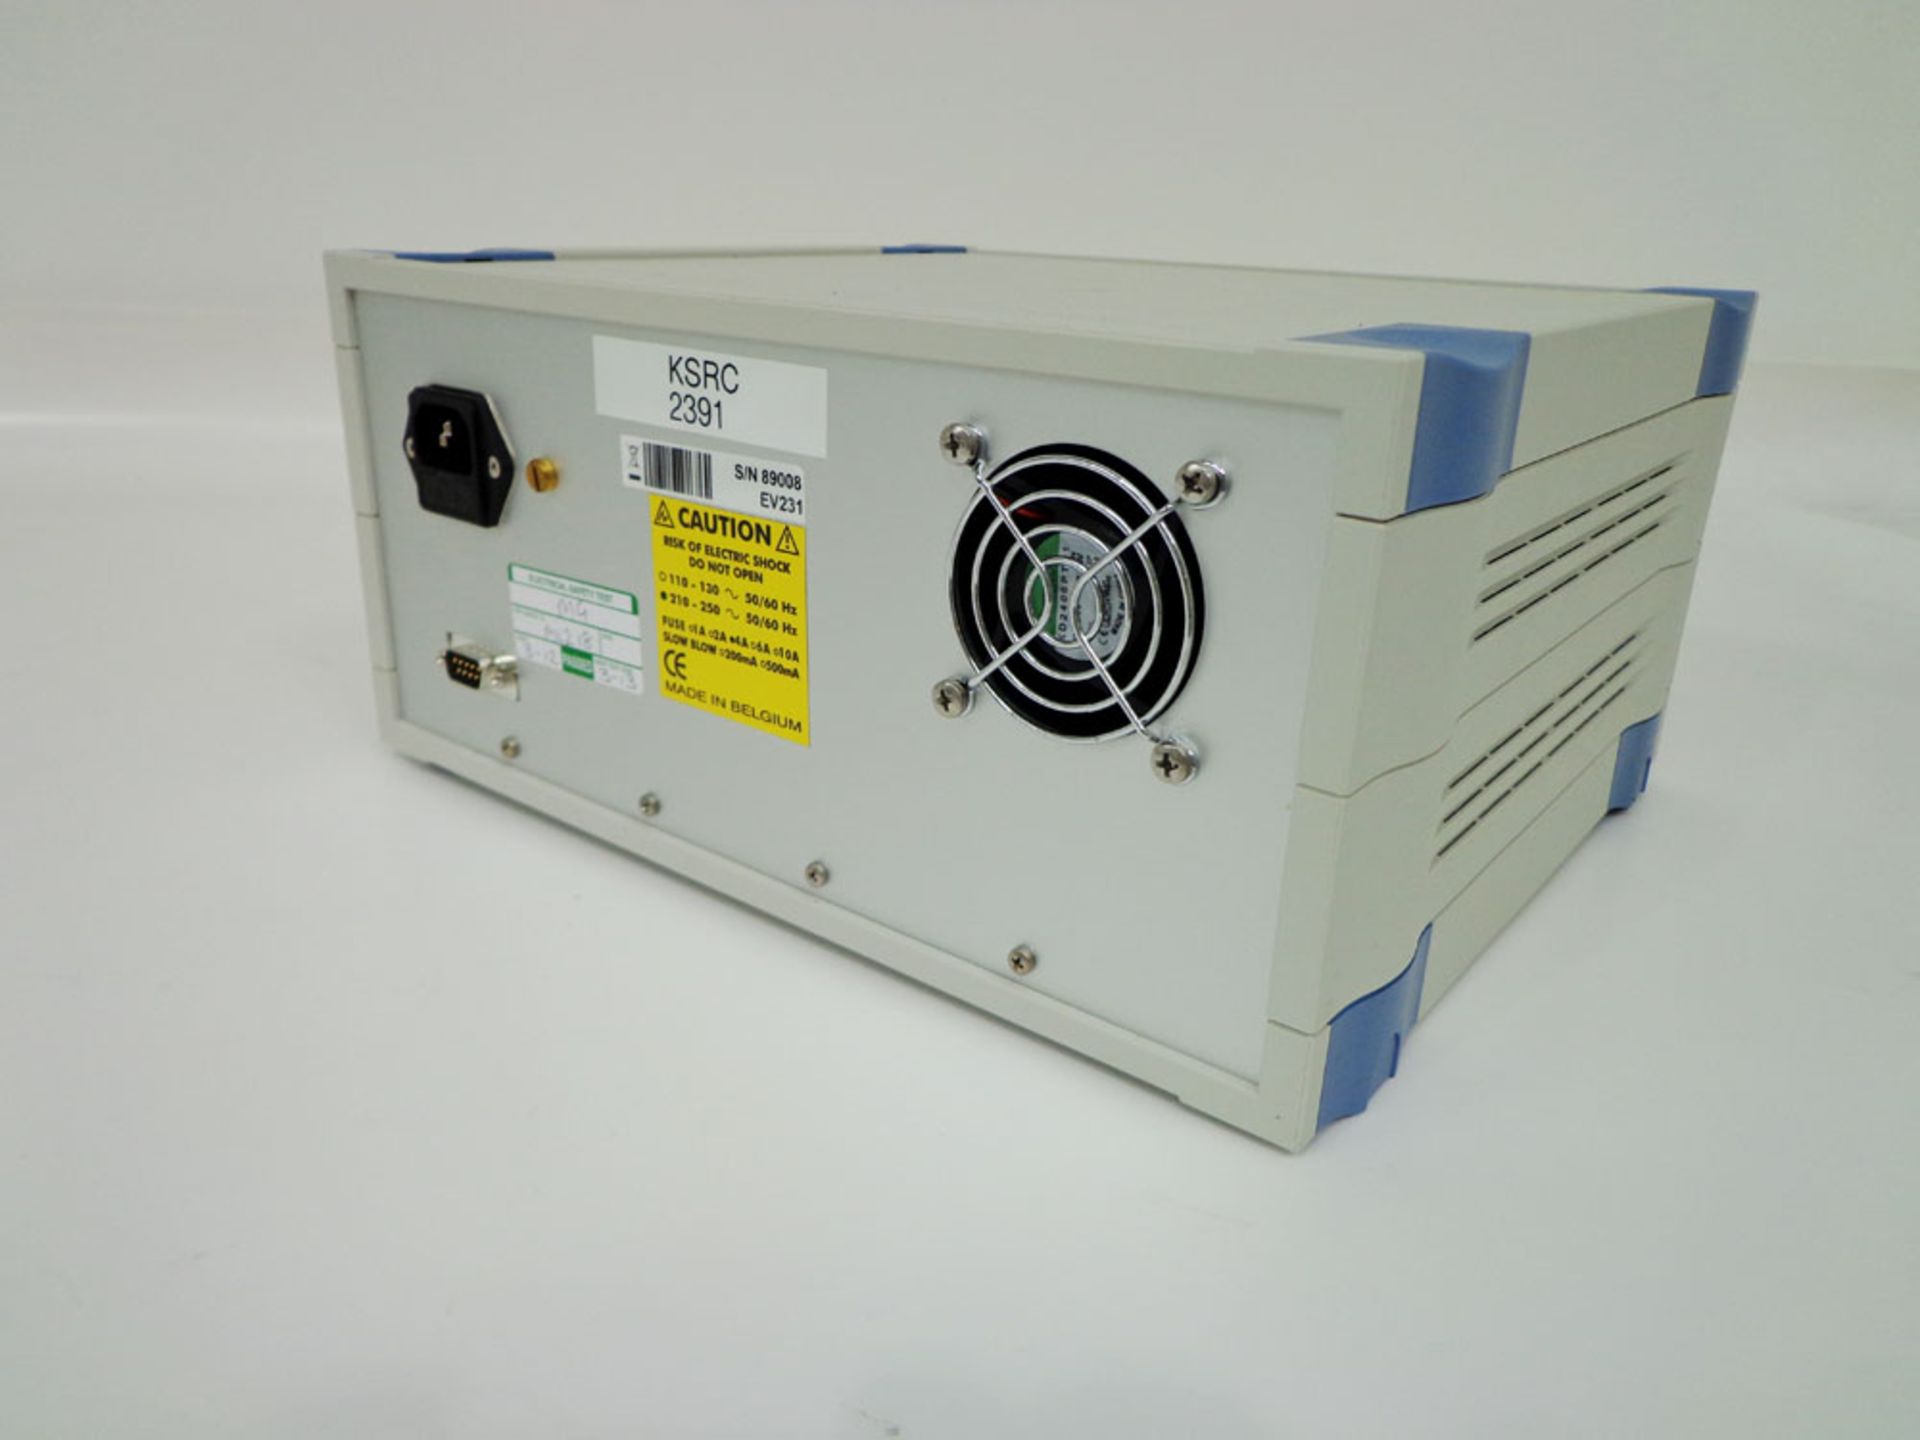 Consort EV231 Electrophoresis Power Supply, serial number 89008 (Ref: WA11807) - Image 3 of 4